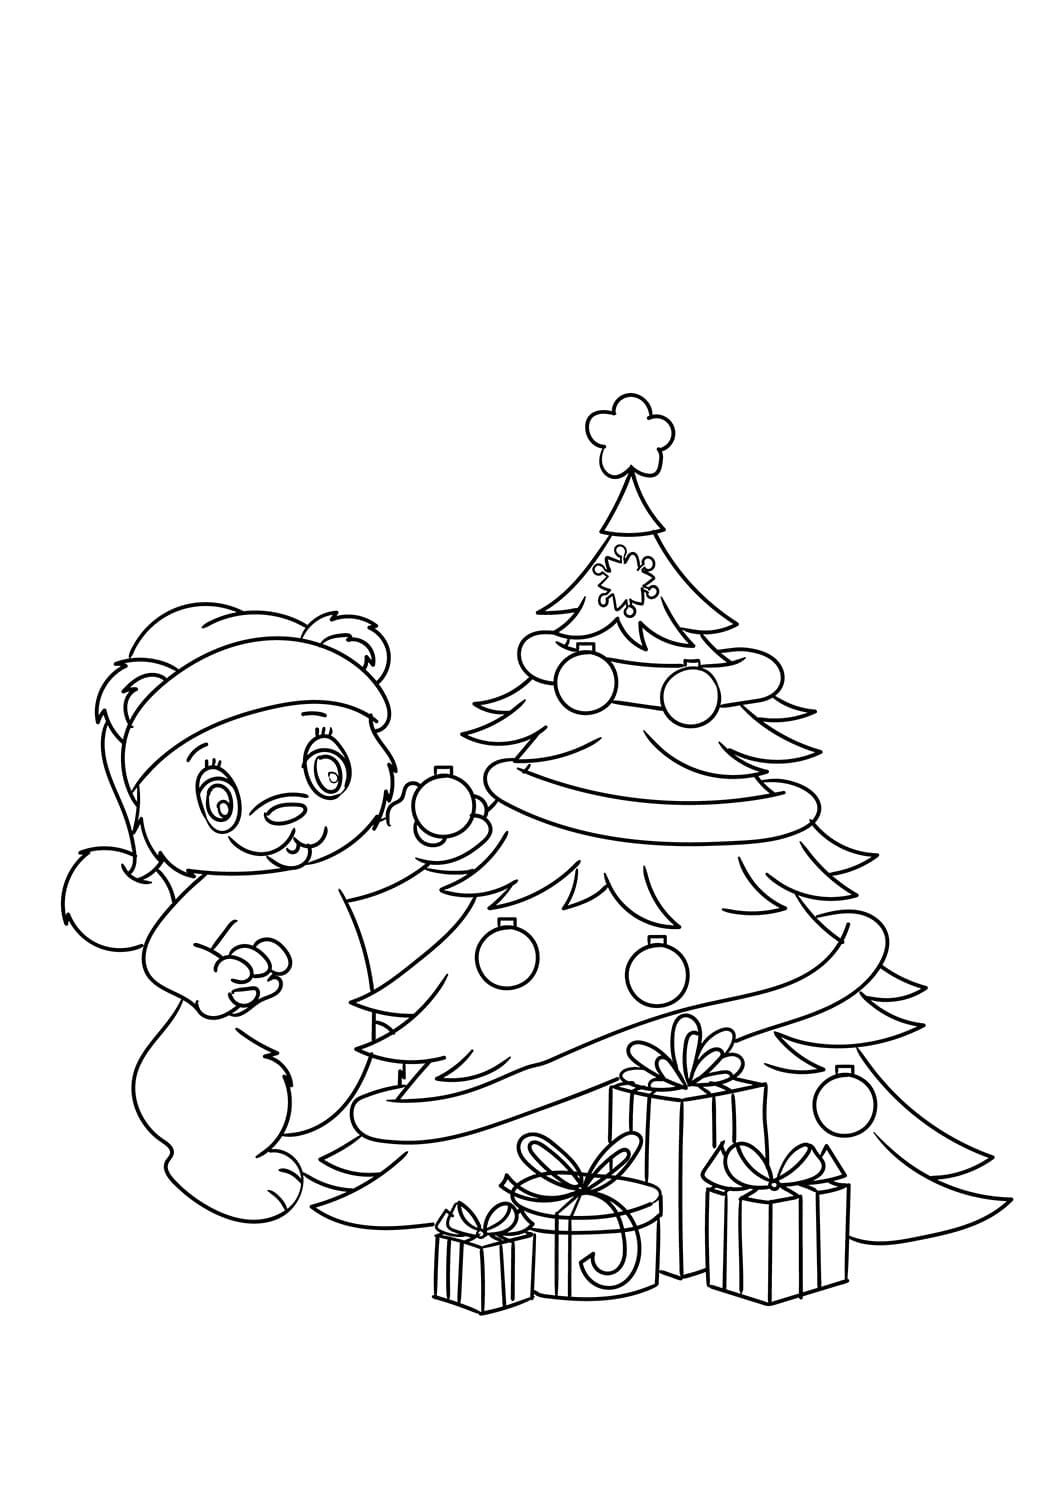 Teddy Decorating Christmas Tree Image For Kids